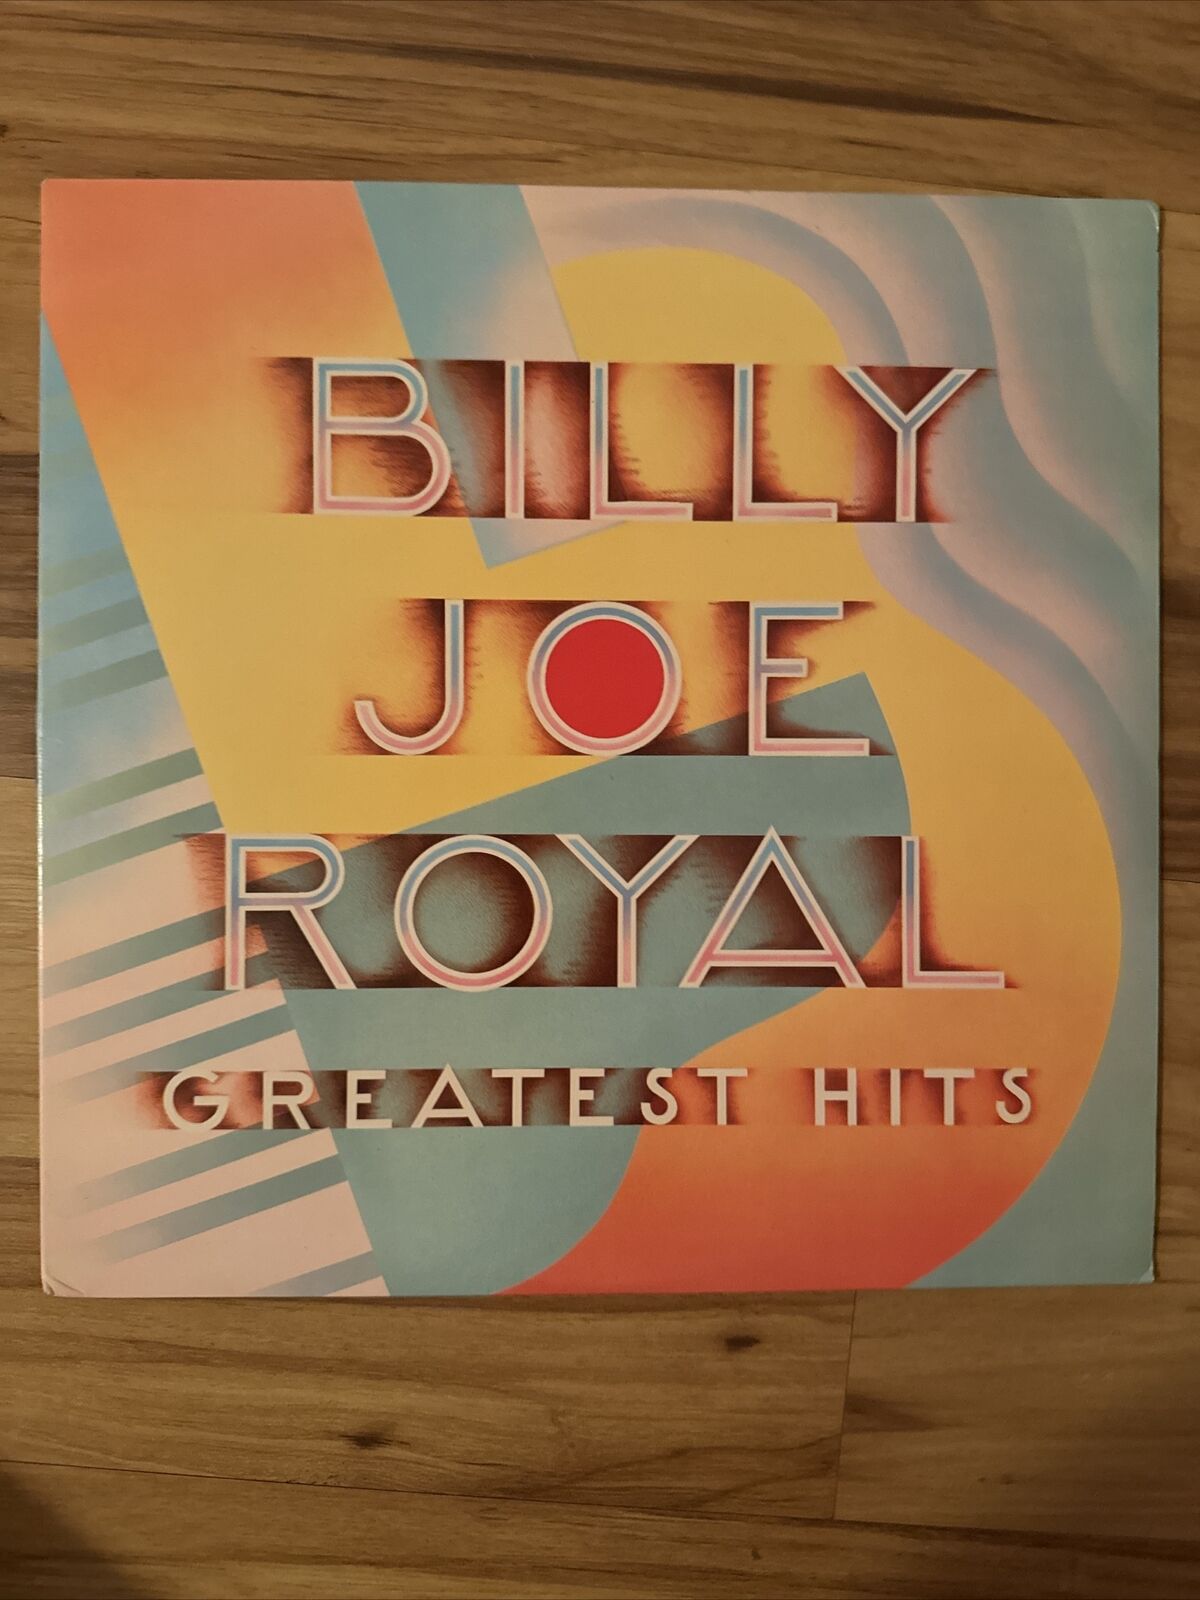 Billy Joe Royal Greatest Hits LP 1989 Columbia Records Fast Shipping